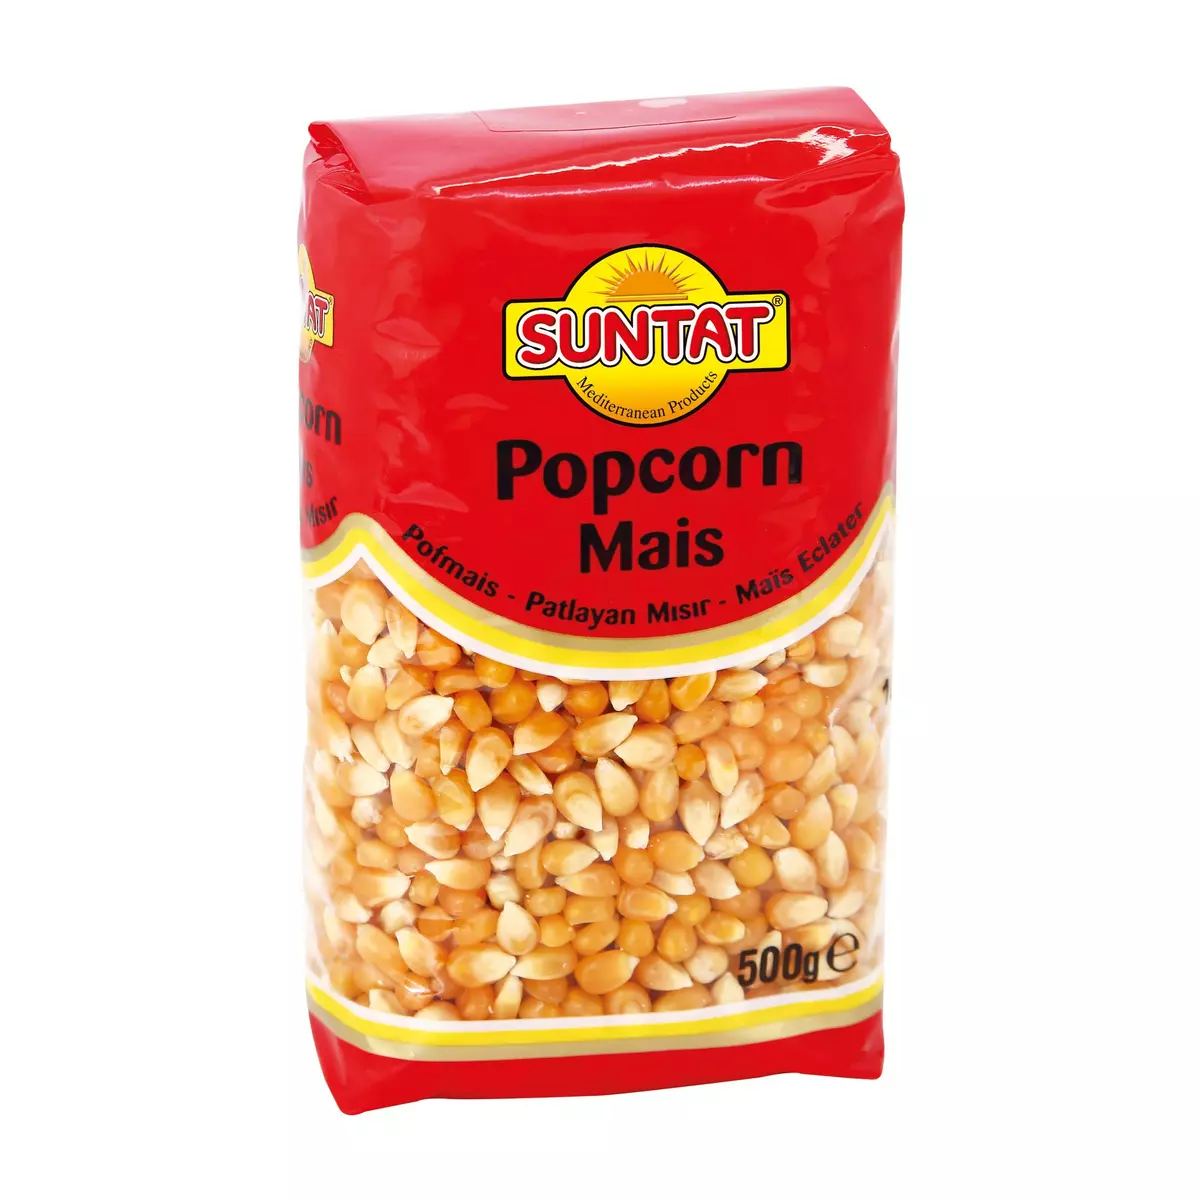 SUNTAT Popcorn maïs 500g